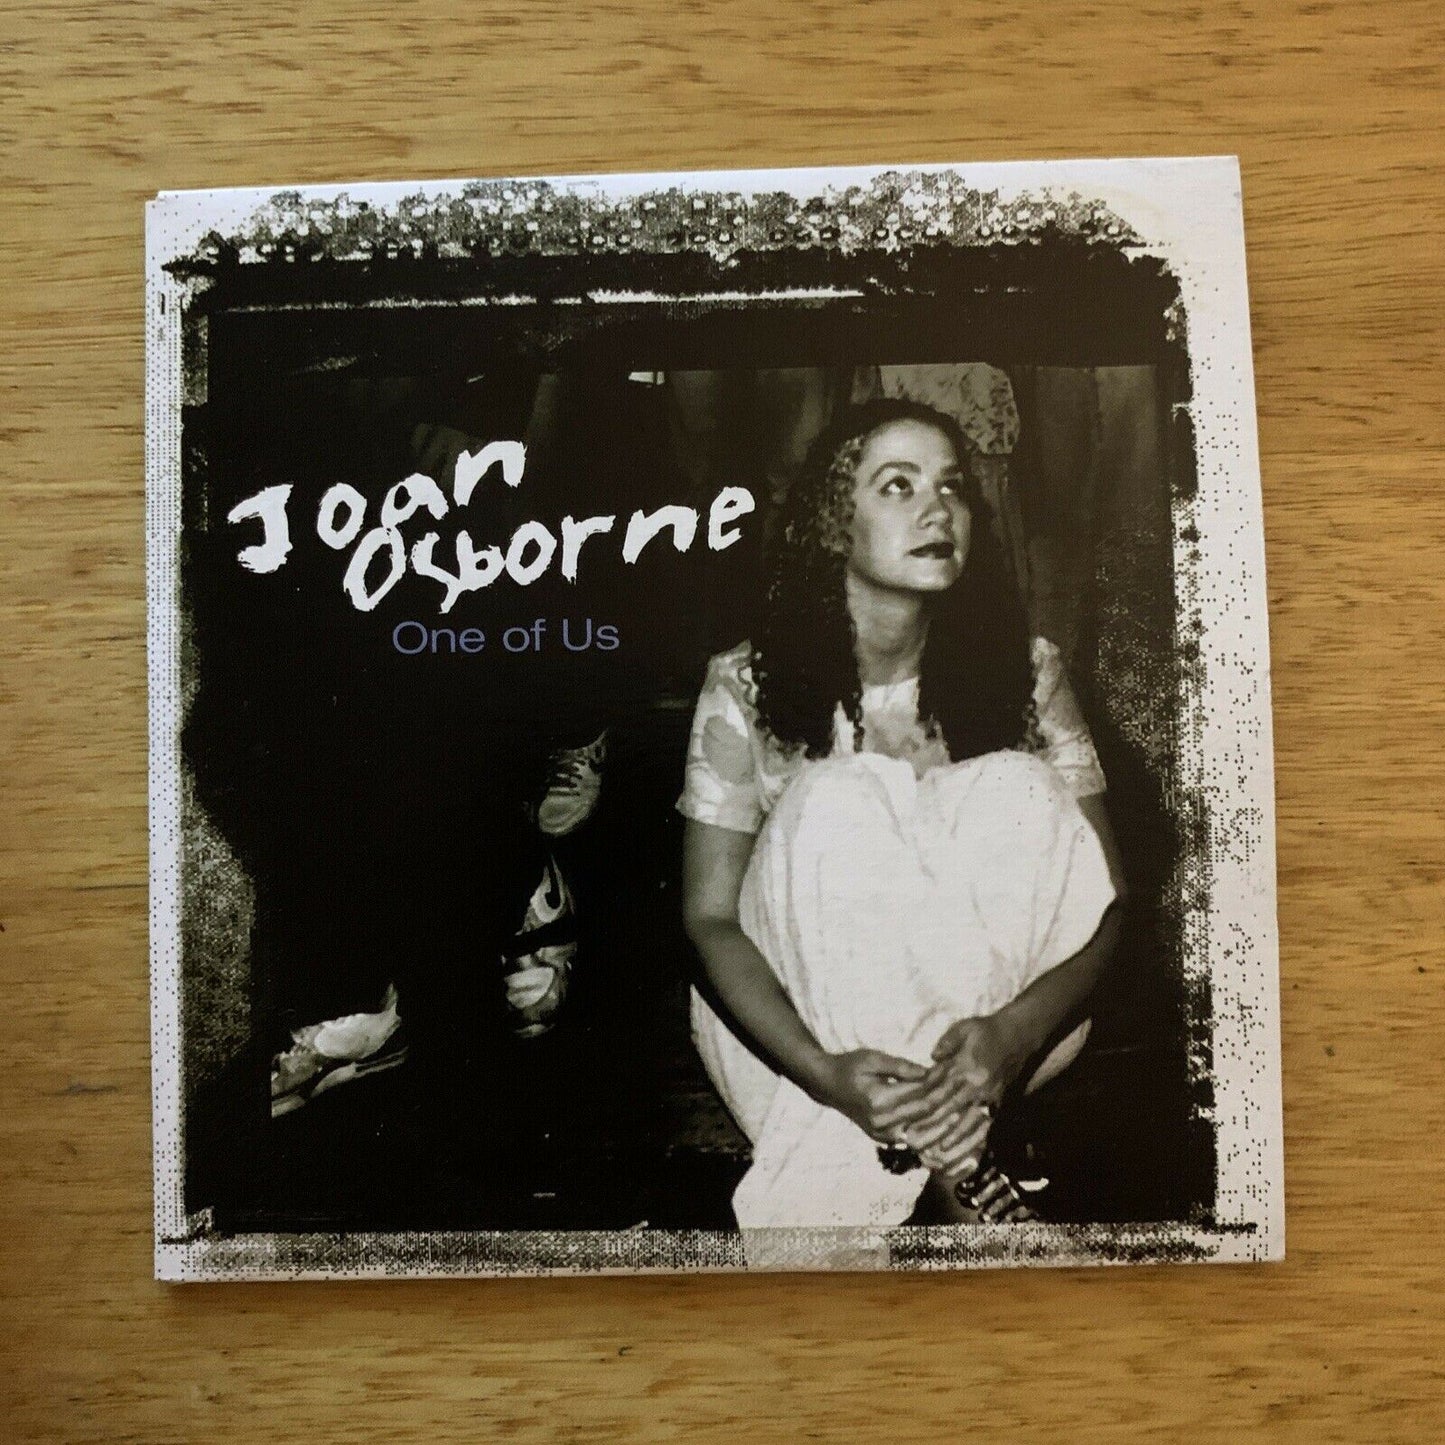 One of Us [#1] [Single] by Joan Osborne (CD, Nov-1995, Mercury)